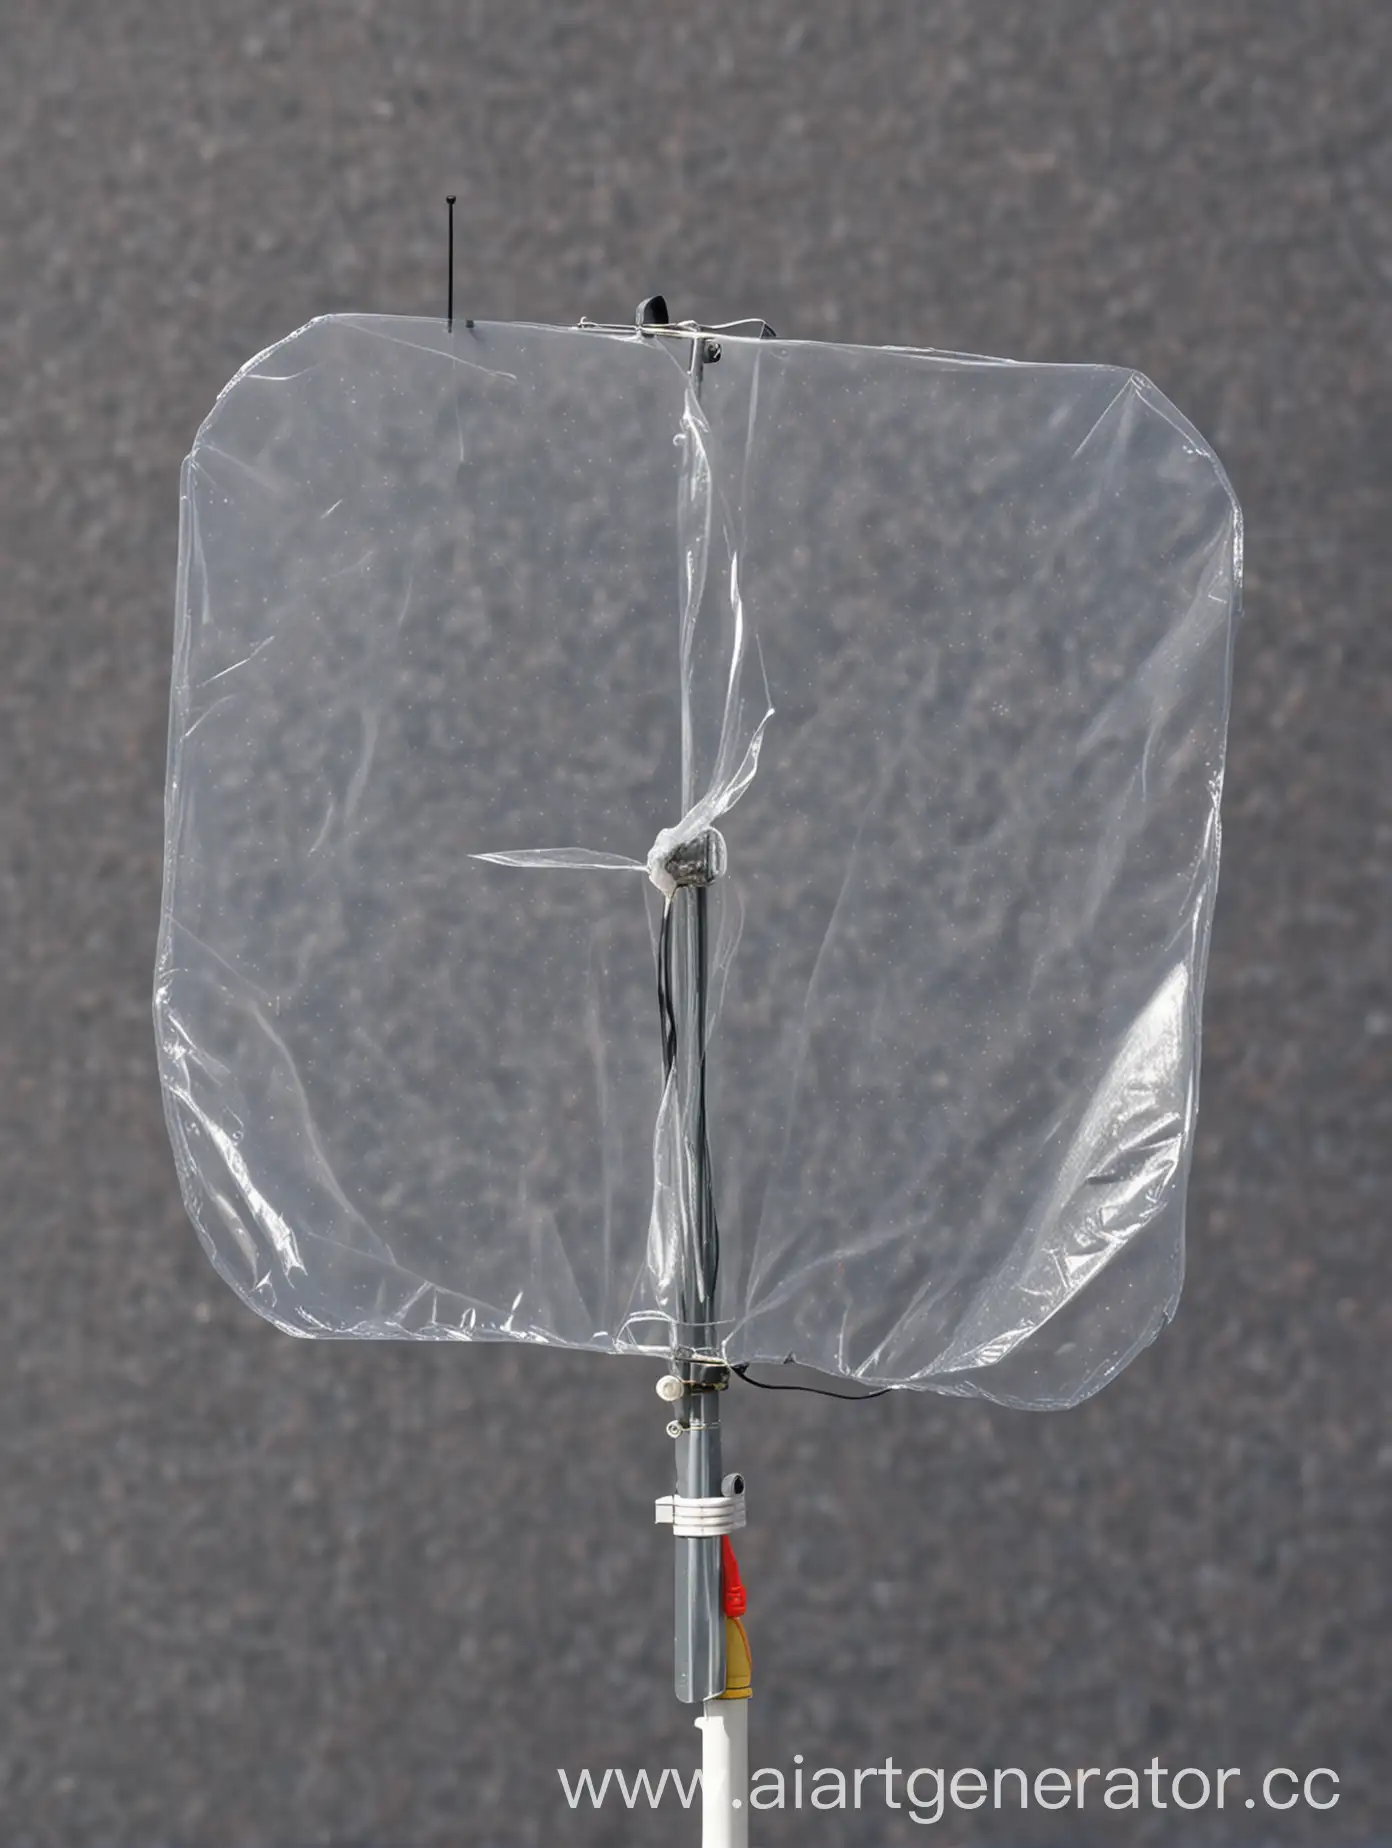 PlasticCovered-Photo-Antenna-Safeguarding-Communication-Technology